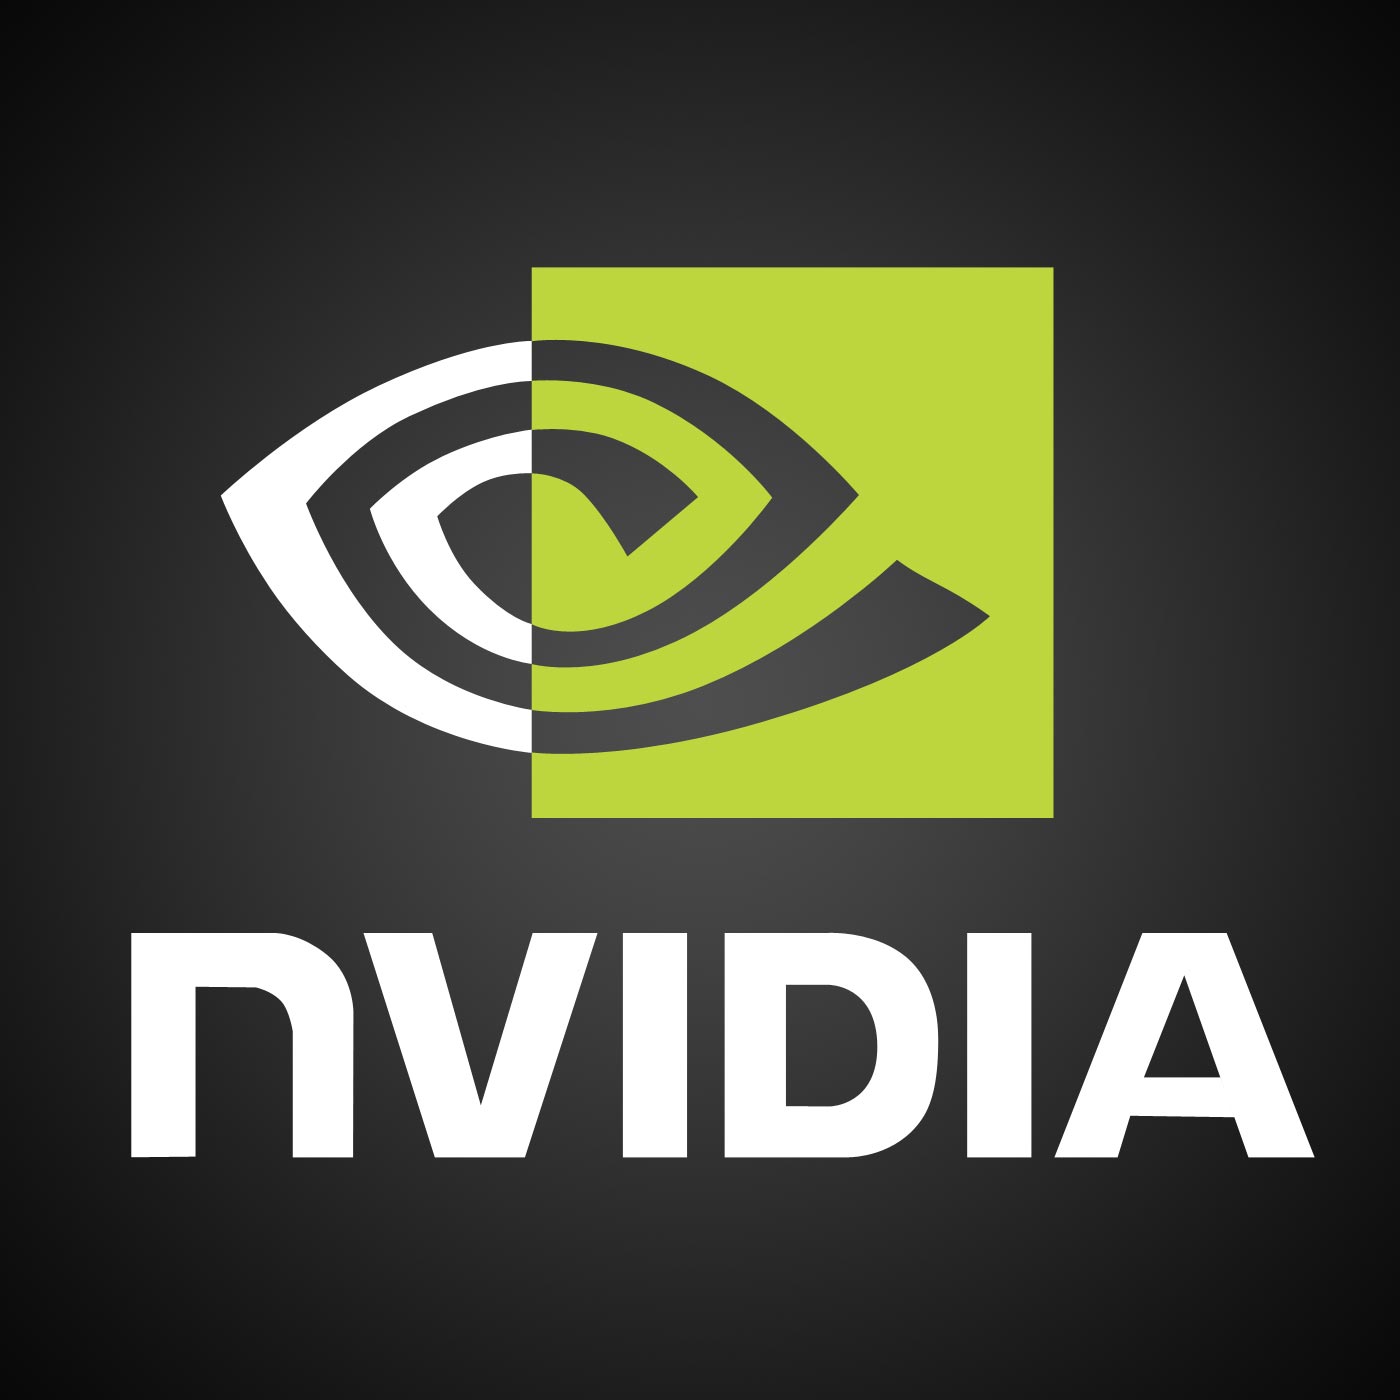 Review NVIDIA GeForce FX 5950 Ultra vs ATI RADEON 9800 XT